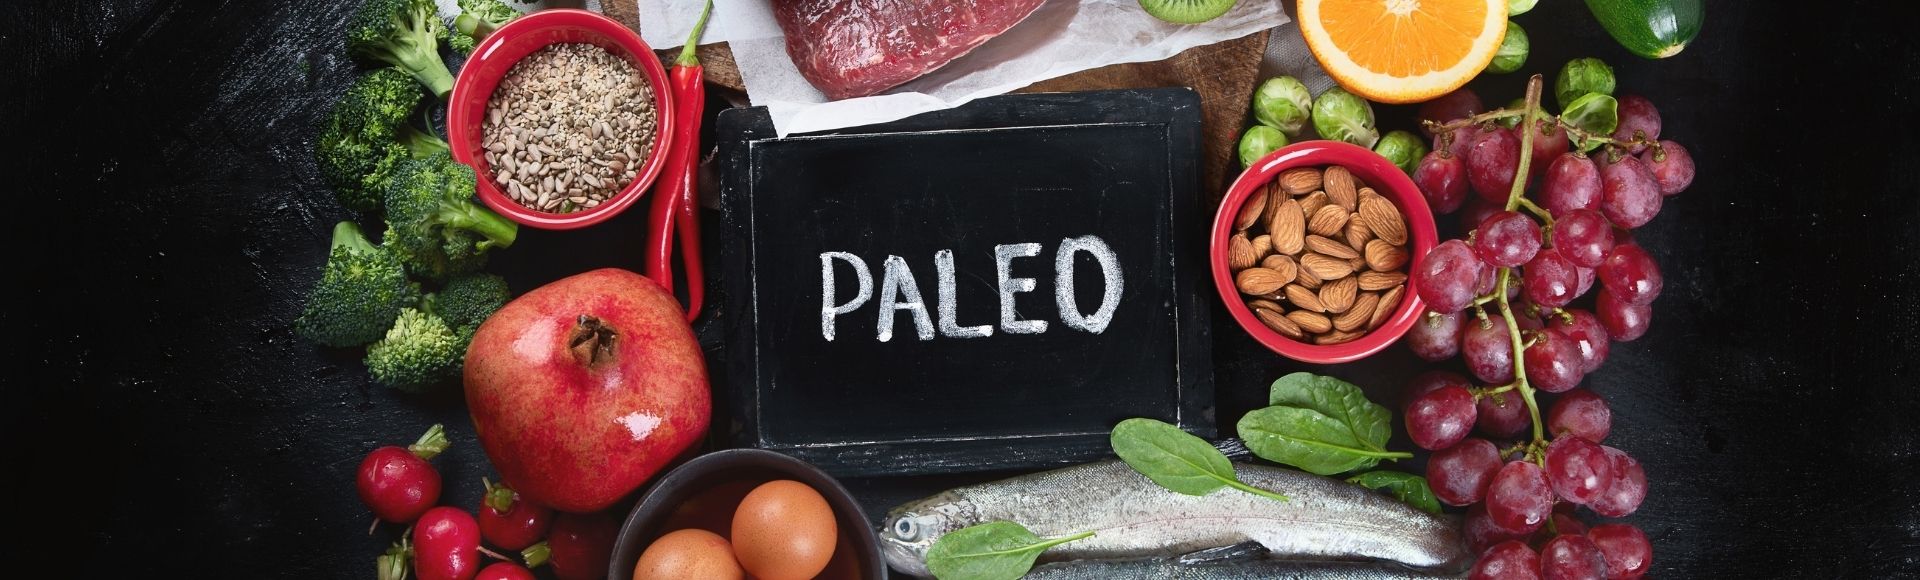 How to Practice the Paleo Diet - The Paleo Diet®